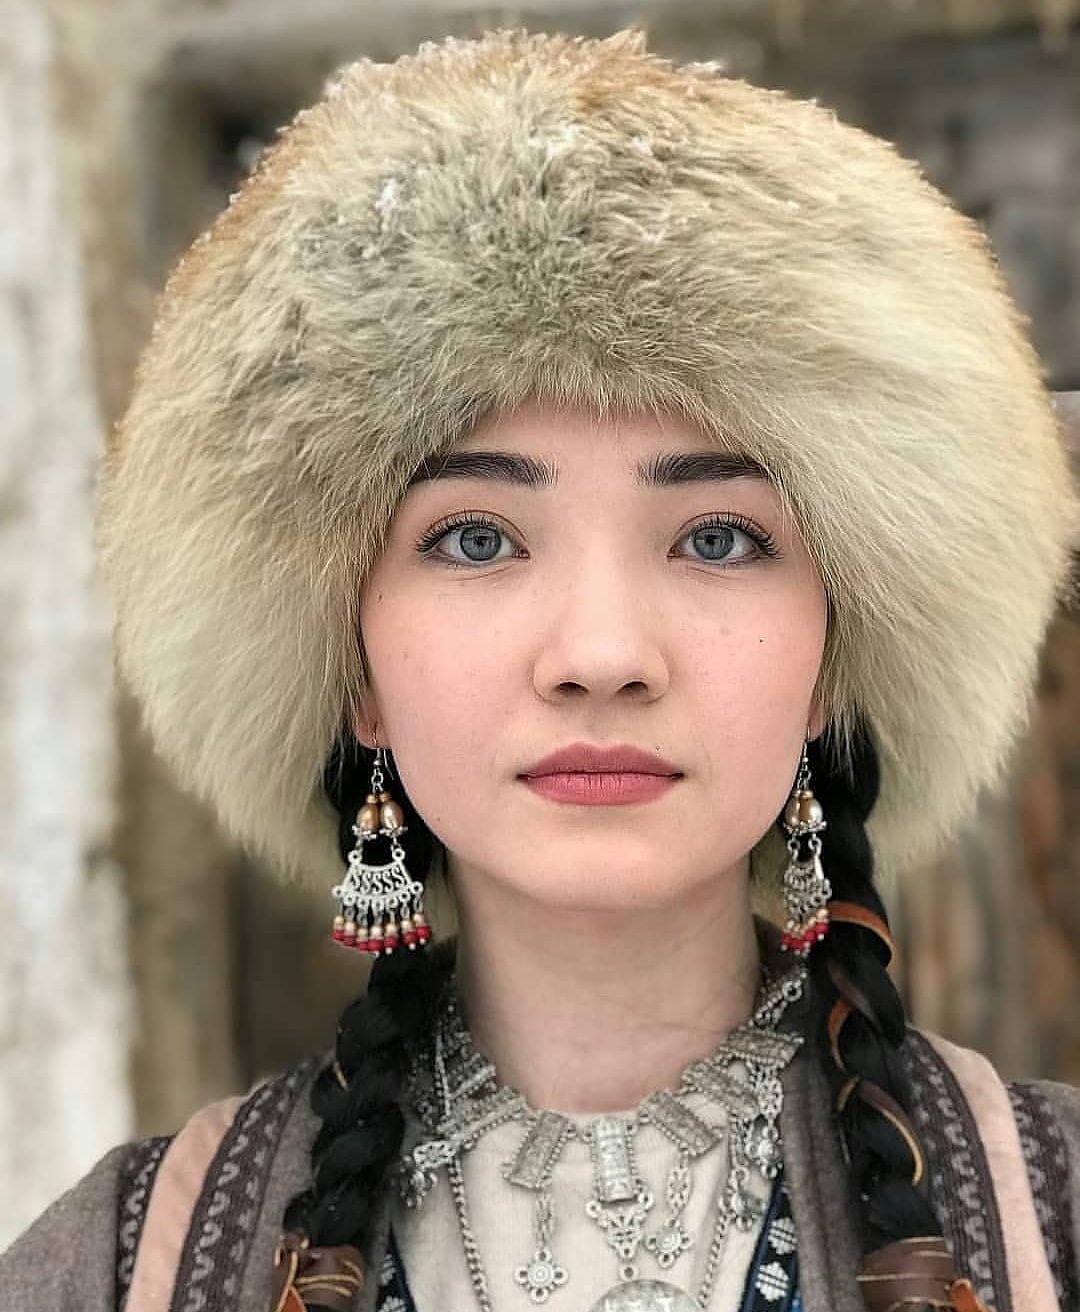 Национальность киргиз. Айя Шалкар. Айя Шалкар Медина. Газиза Тлеубай актриса. Айя Шалкар в национальном костюме.